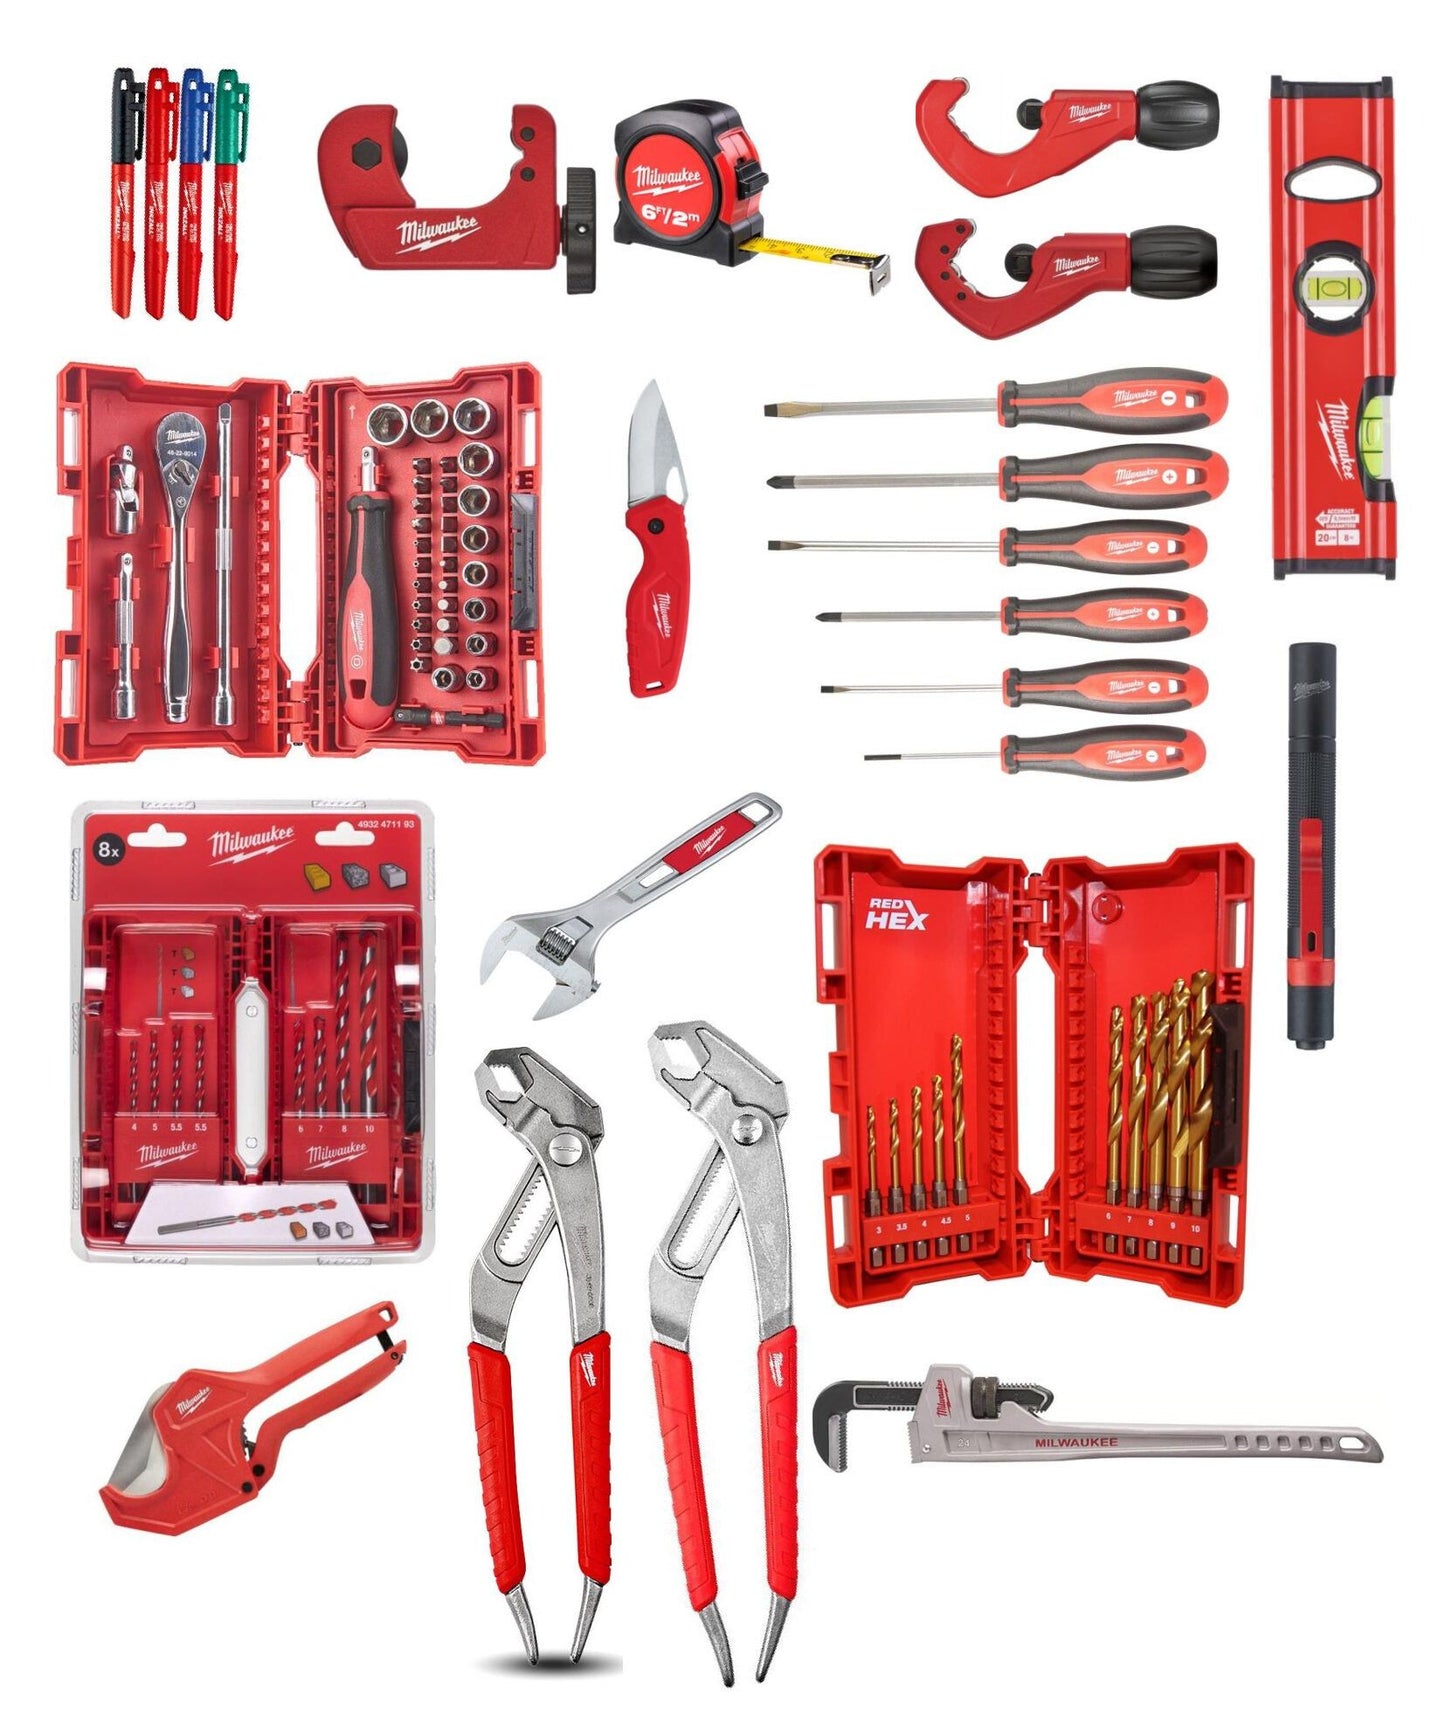 Kit d'installation Packout avec 17 outils Milwaukee